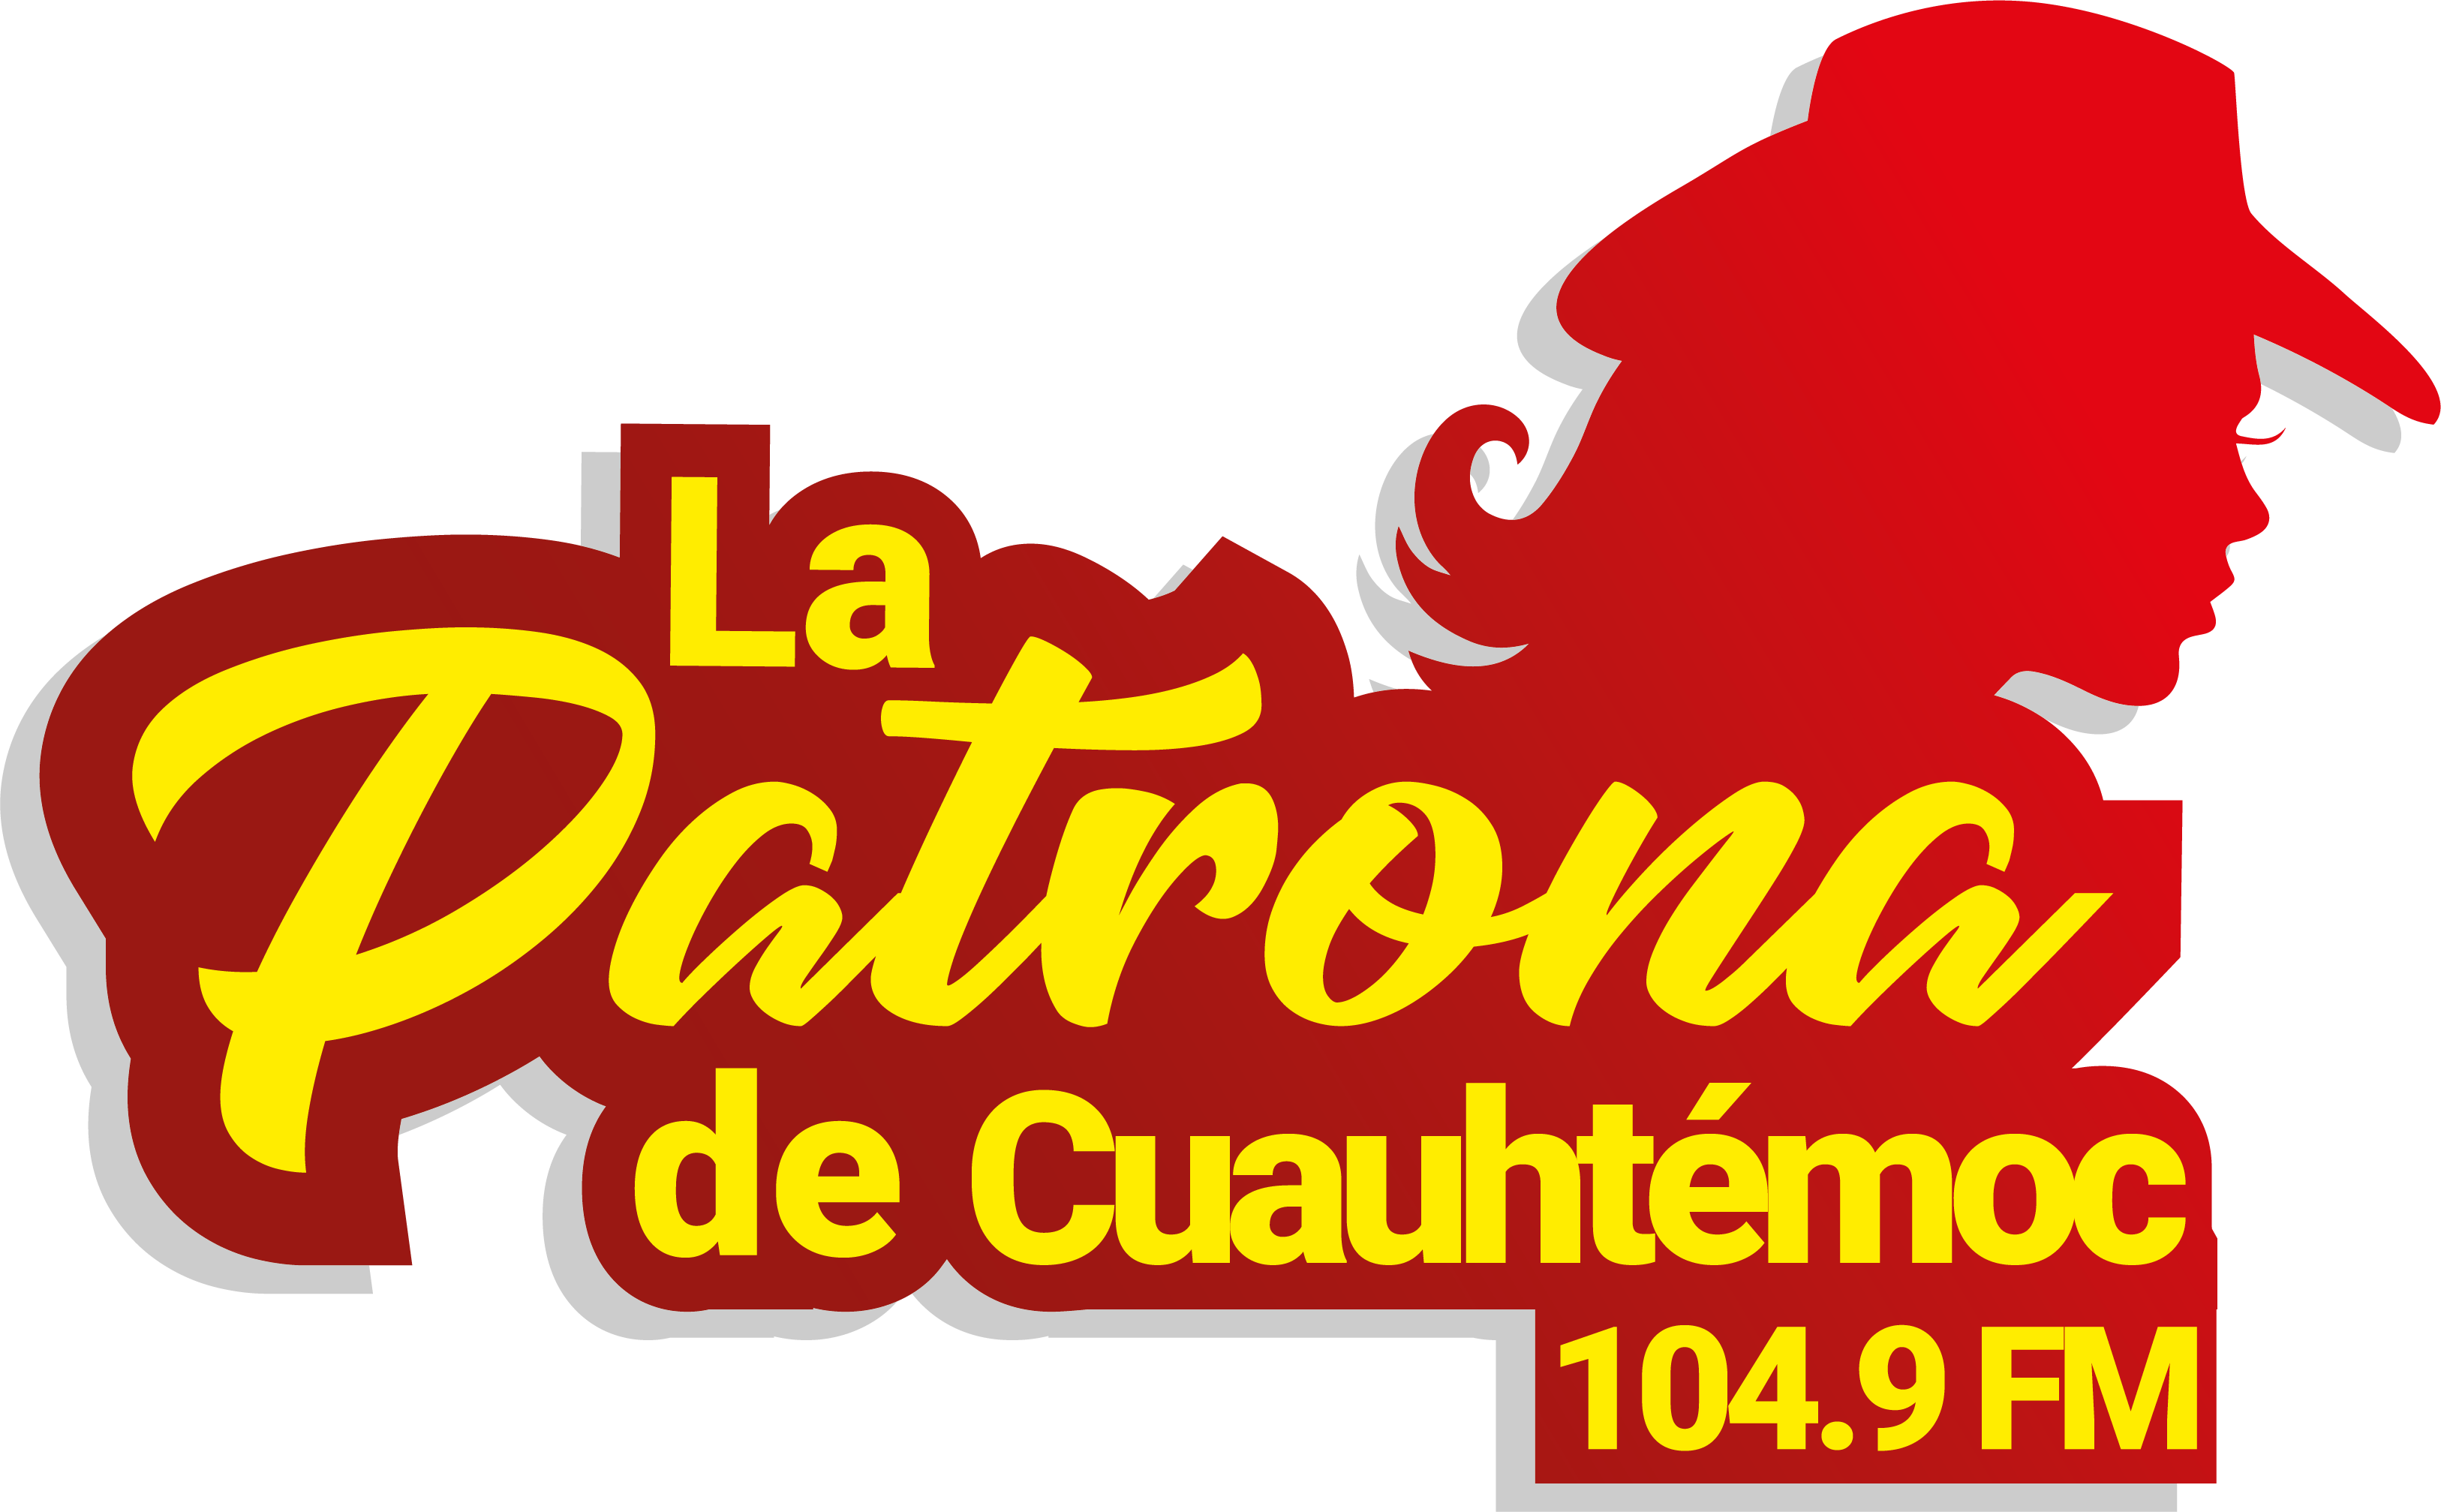 La patrona - 104.9 FM [Cuauhtémoc, Chihuahua]